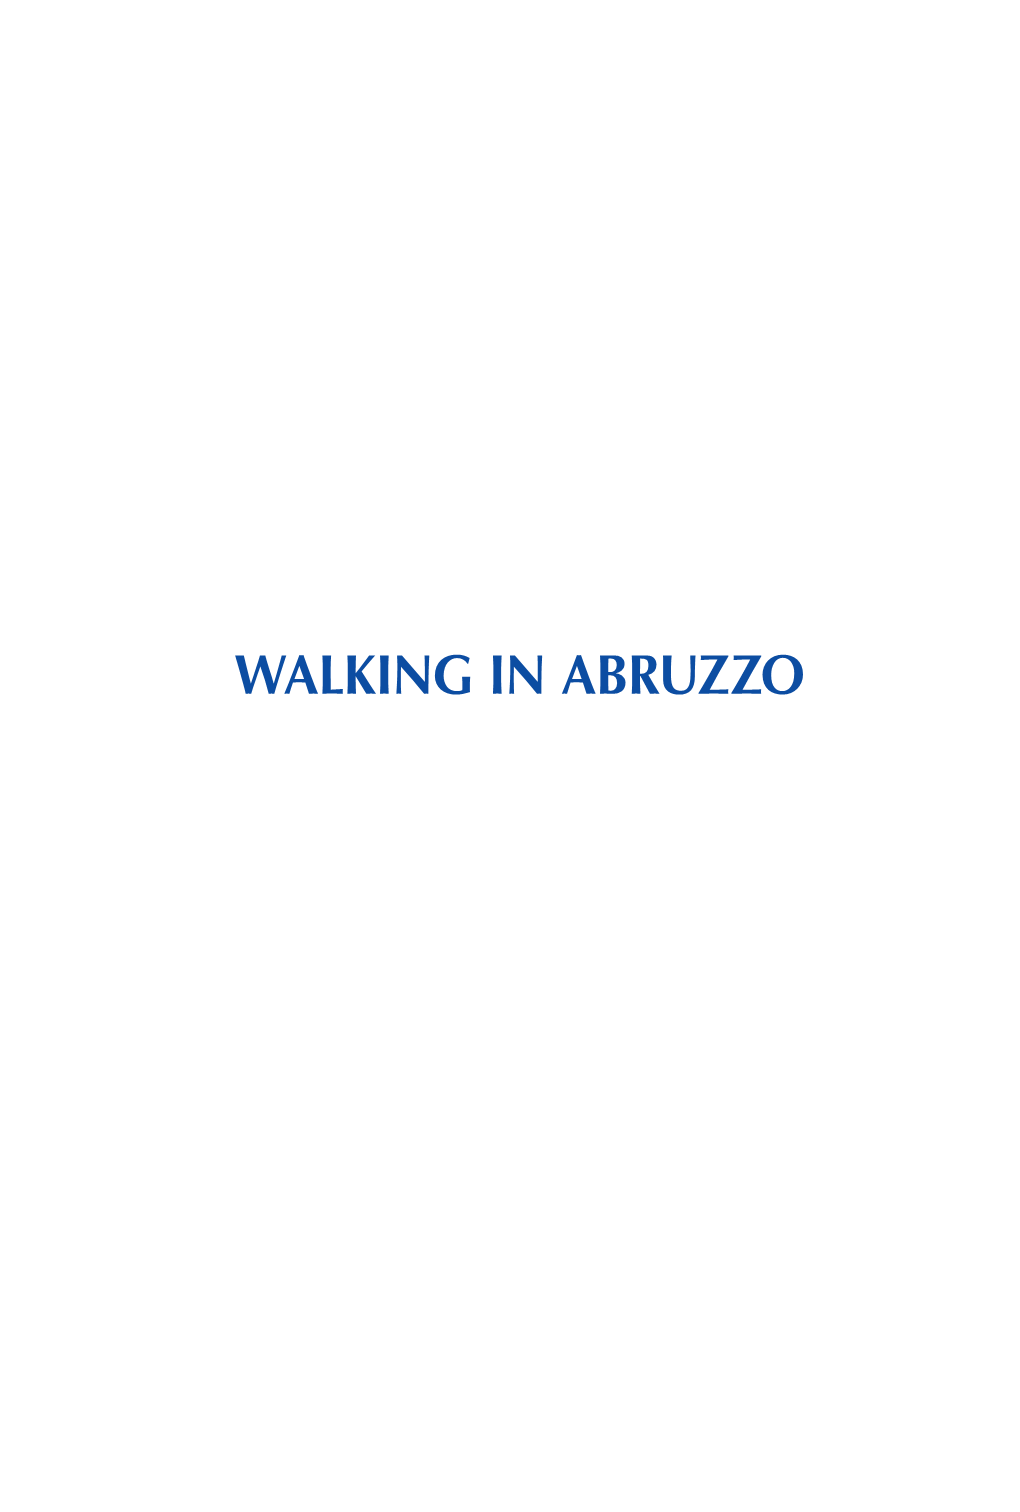 Walking in Abruzzo Walking in Abruzzo